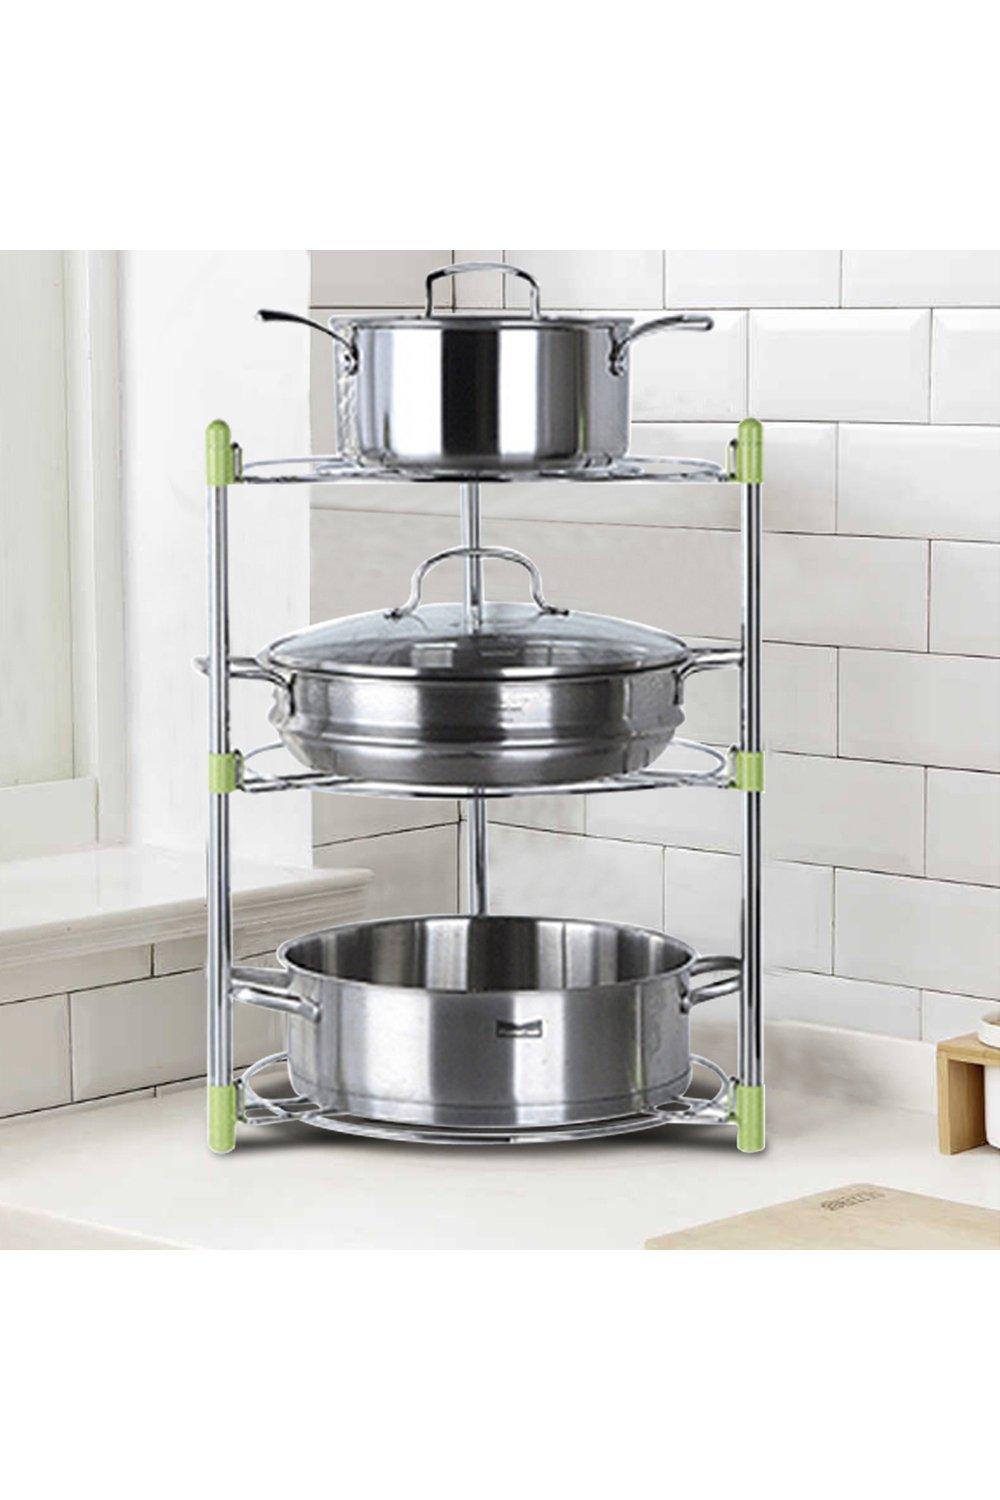 Livingandhome 3 Tier Kitchen Pot Pan Organizer Rack Adjustable Cookware Holder  Stand Shelf